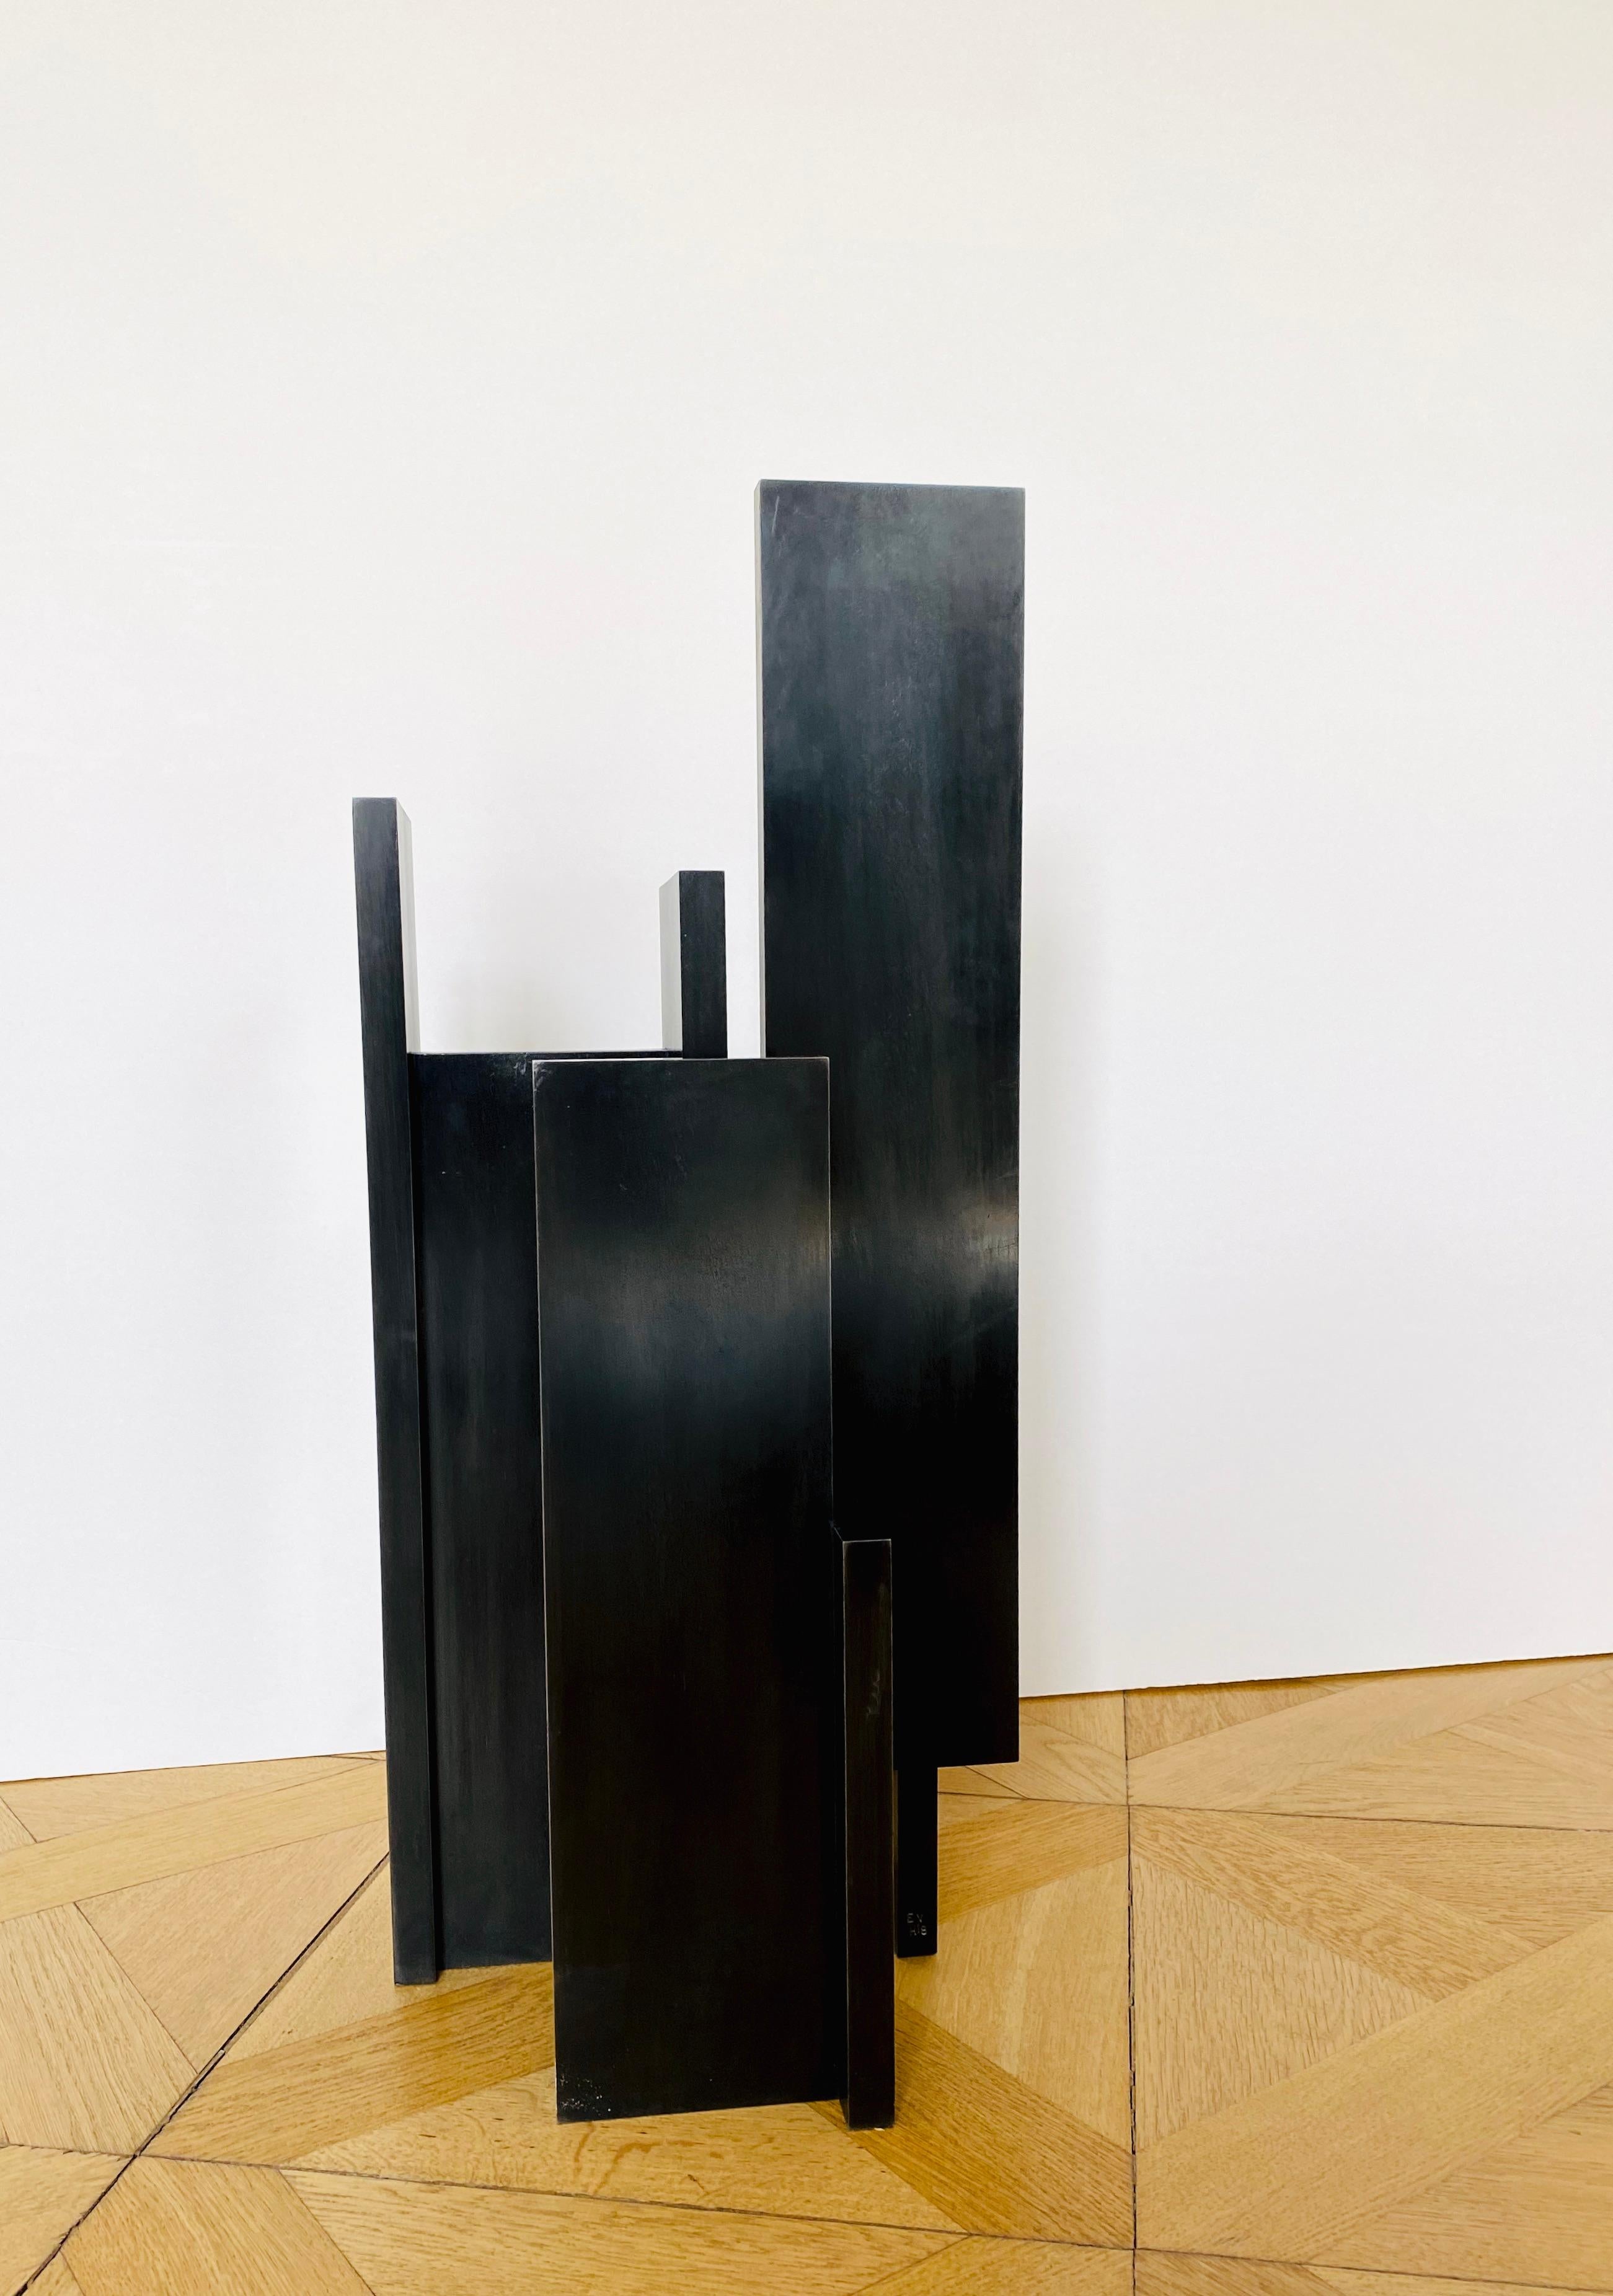 Architecture, 2018, steel sculpture, abstract, rust, minimalism,  - Minimalist Sculpture by Etienne Viard